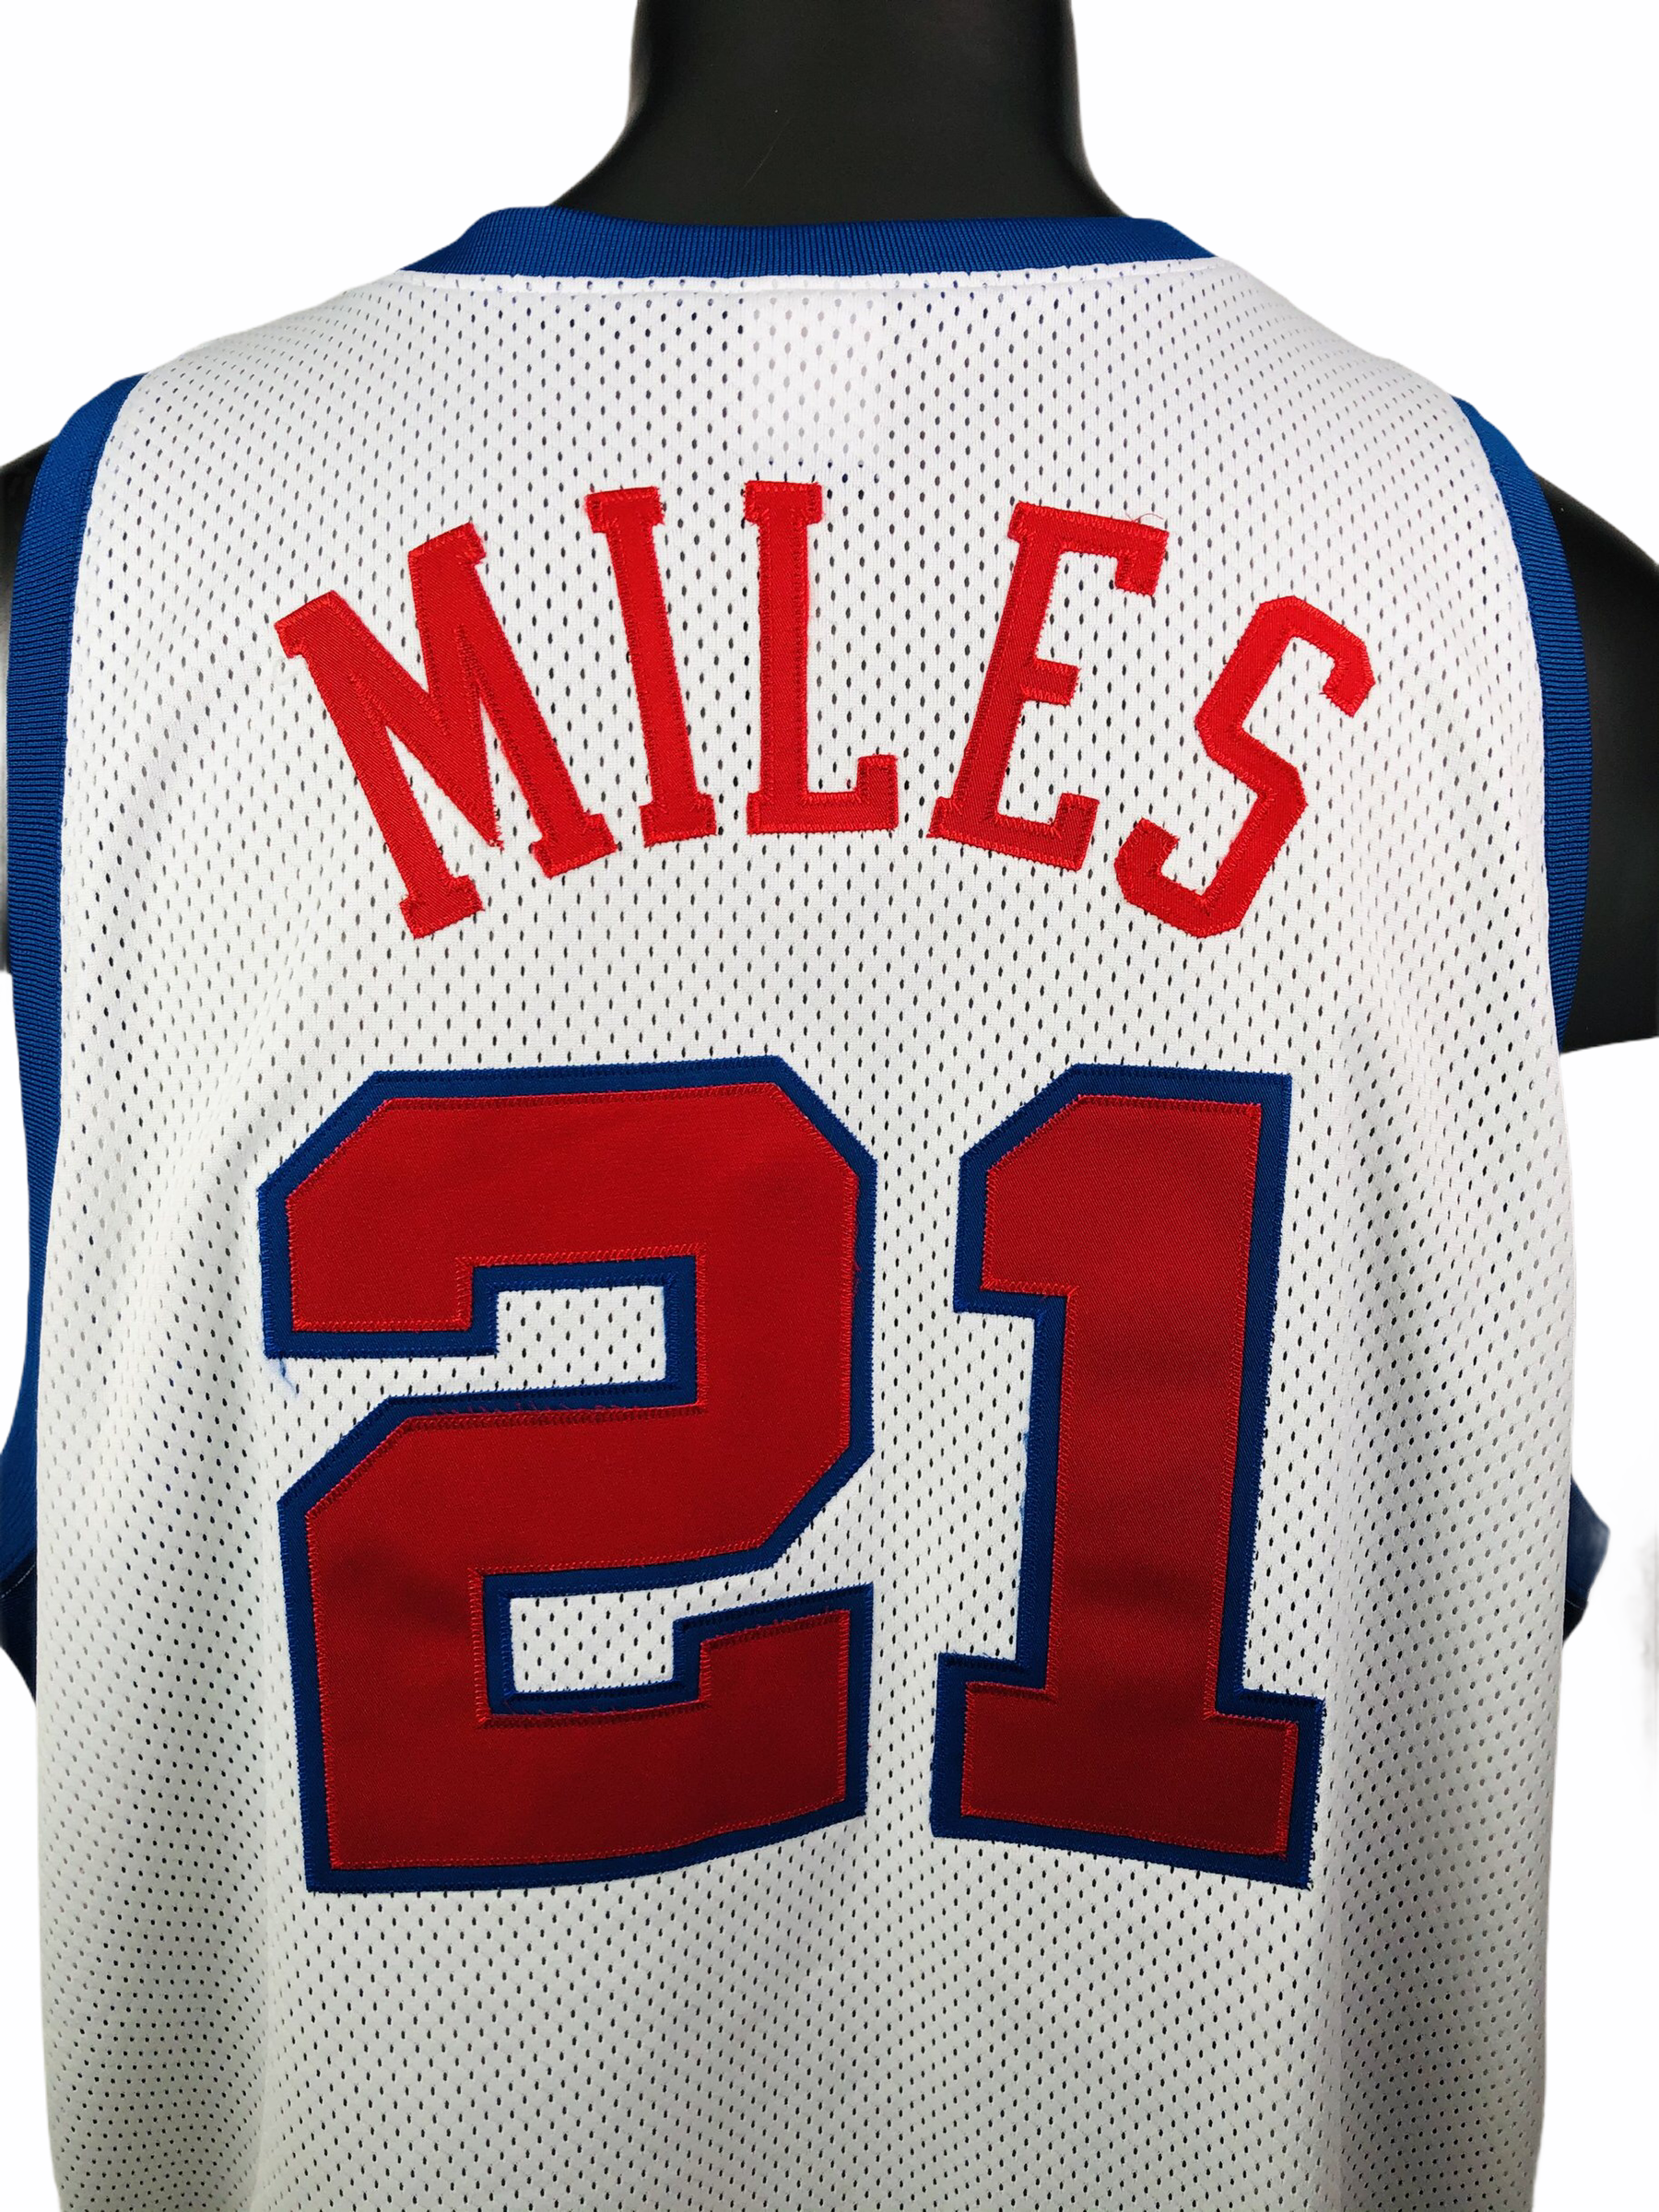 RARE Cleveland Cavaliers Darius Miles Authentic Jersey Nike Size 2XL  Vintage